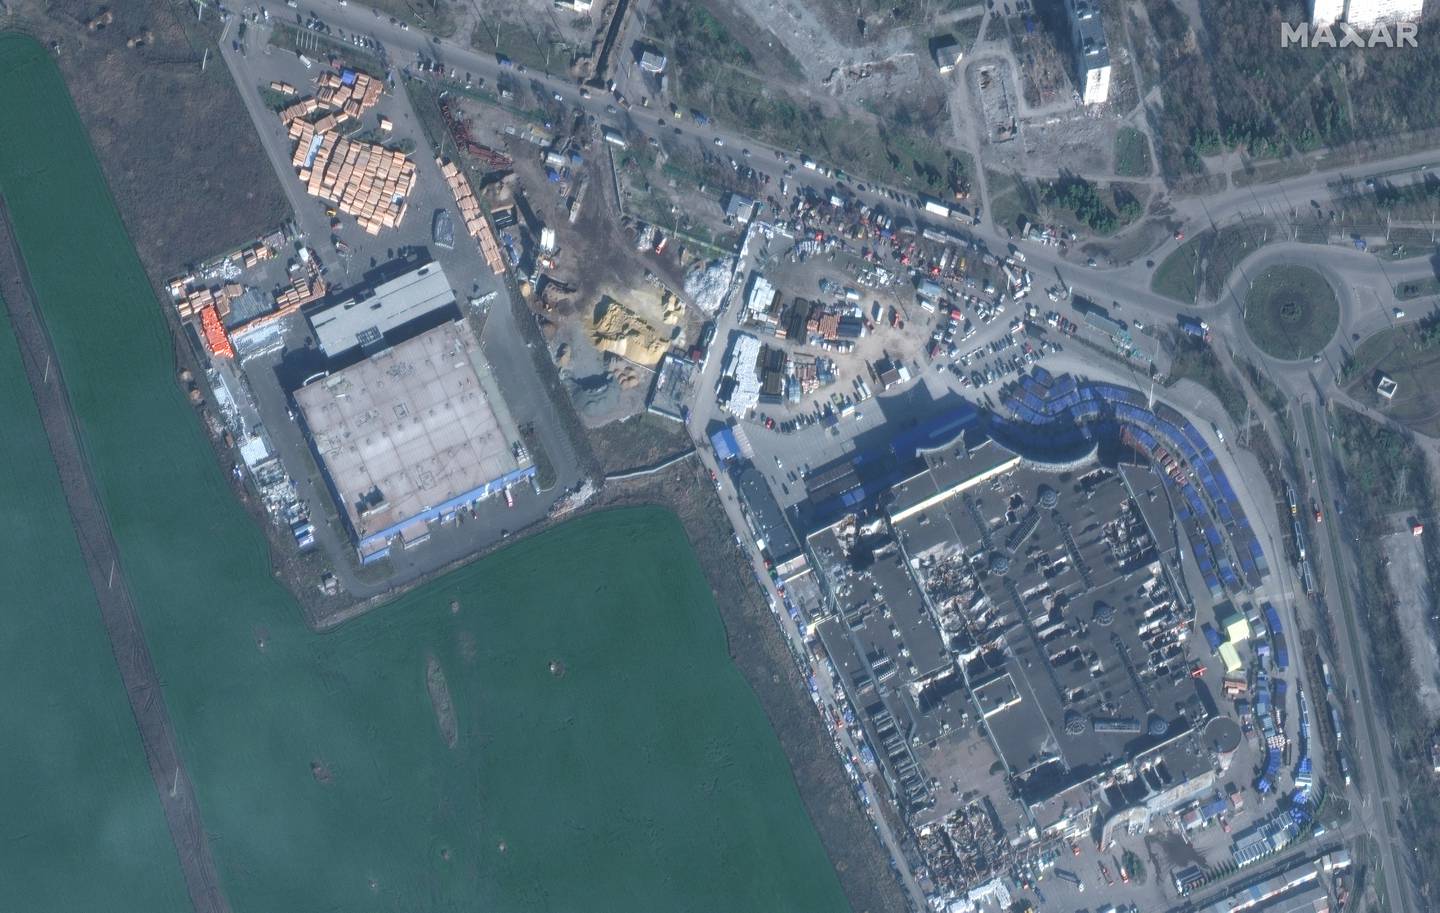 Satellite image shows building supplies at Metro Shopping Center, Mariupol, Ukraine, Nov. 30, 2022.